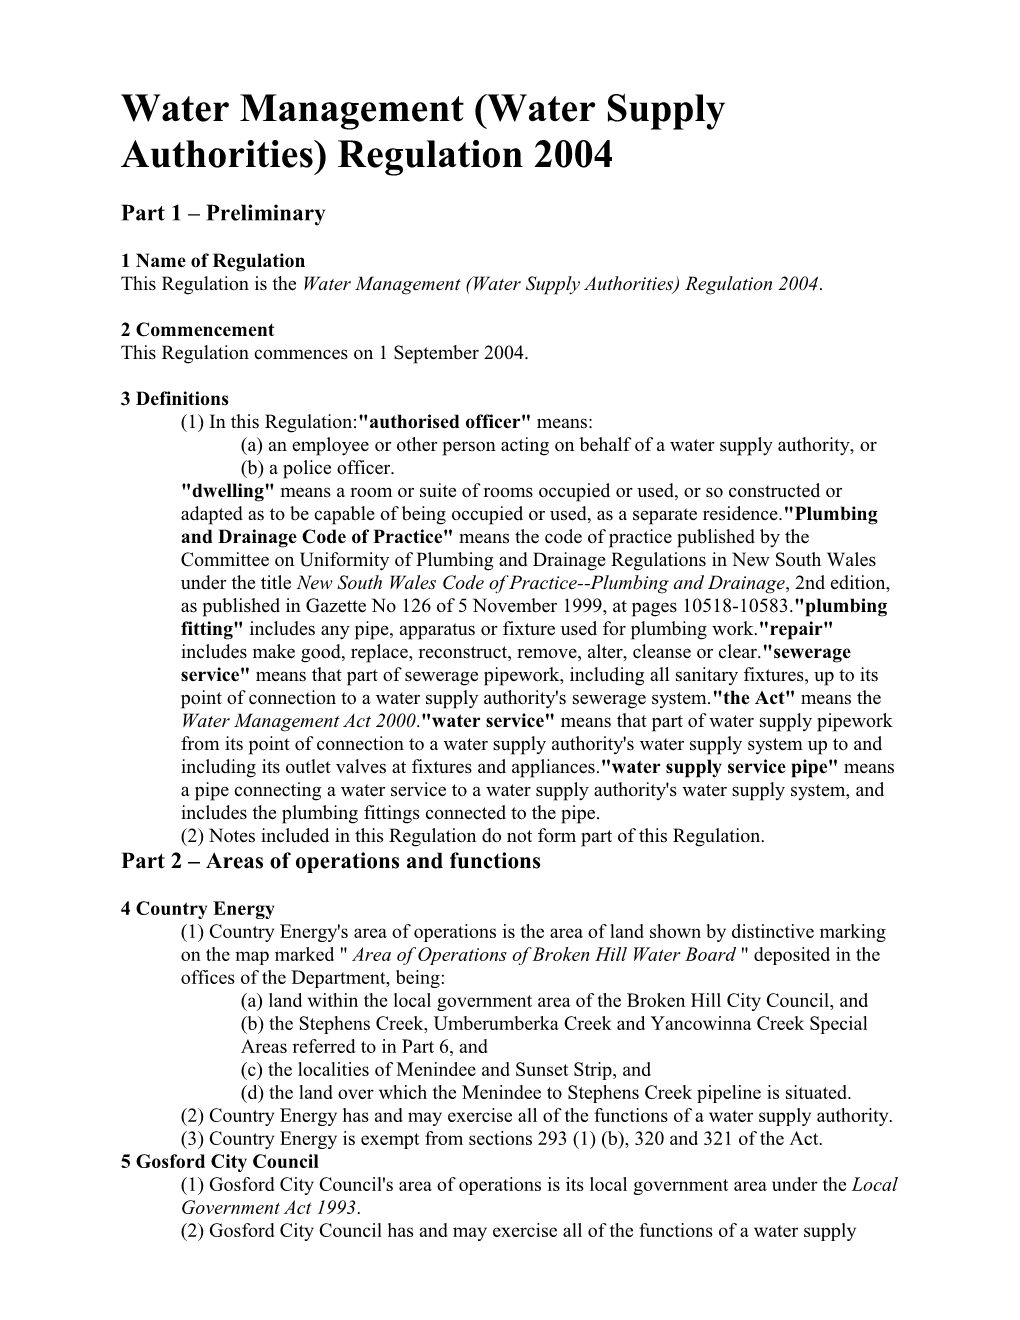 Water Management (Water Supply Authorities) Regulation 2004